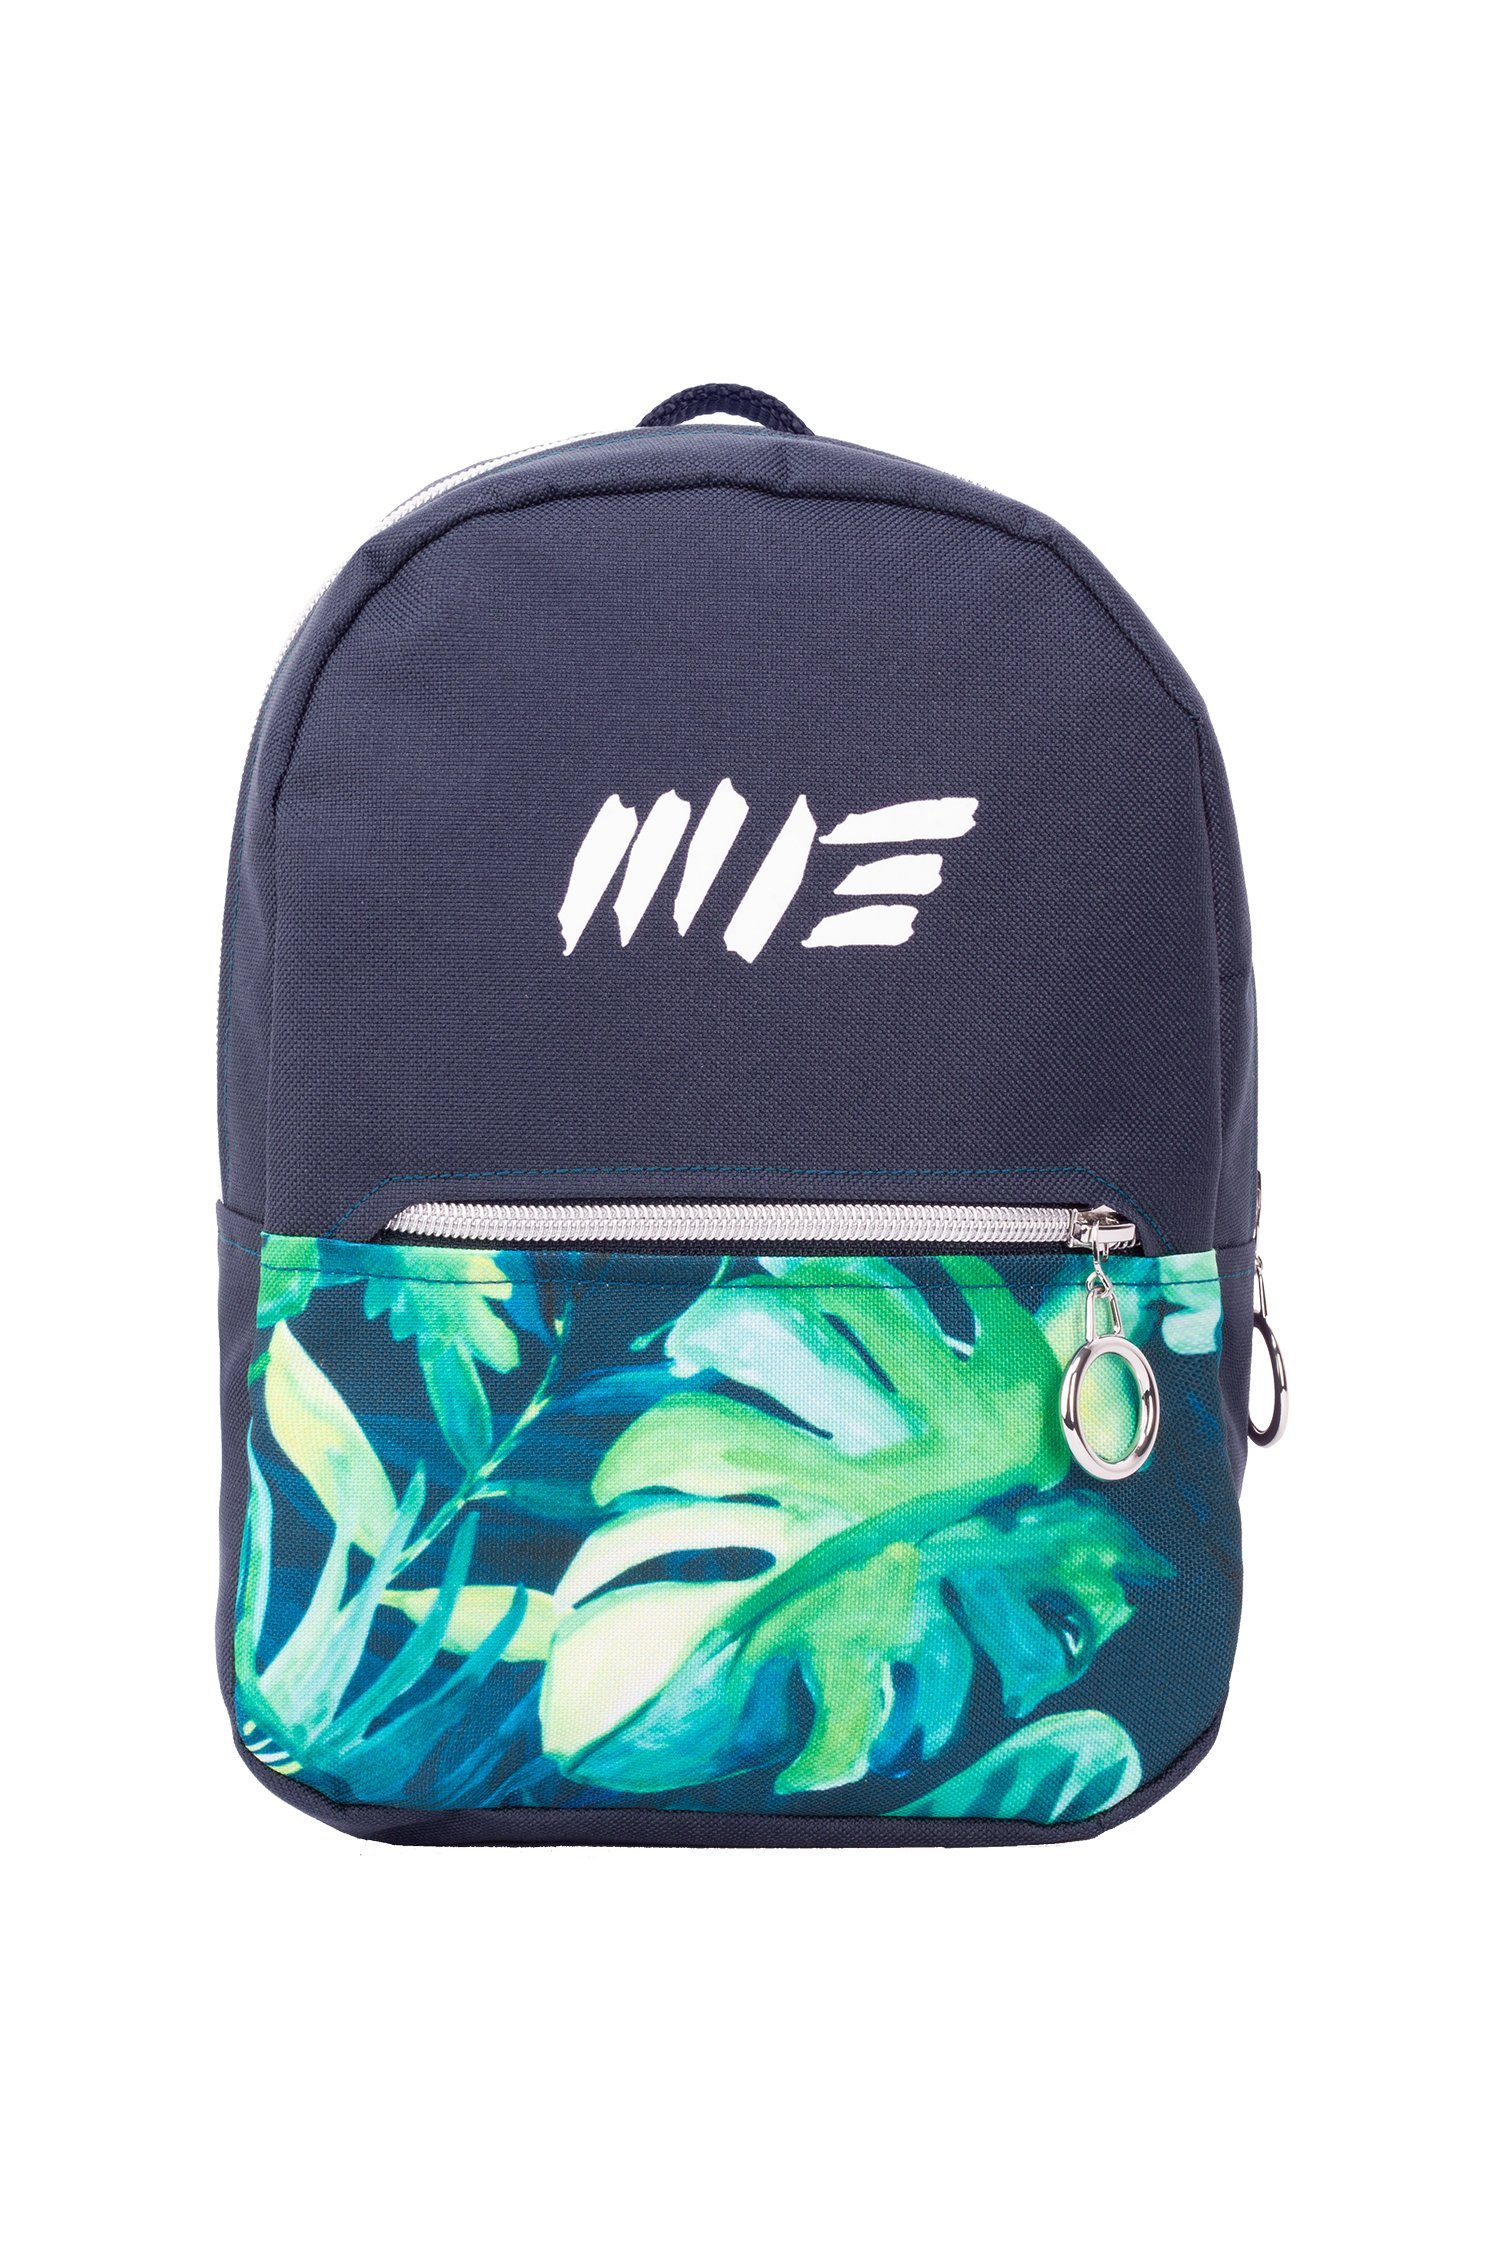 Manufaktur13 Minirucksack Mini Daypack- kleiner, wasserfester Tagesrucksack